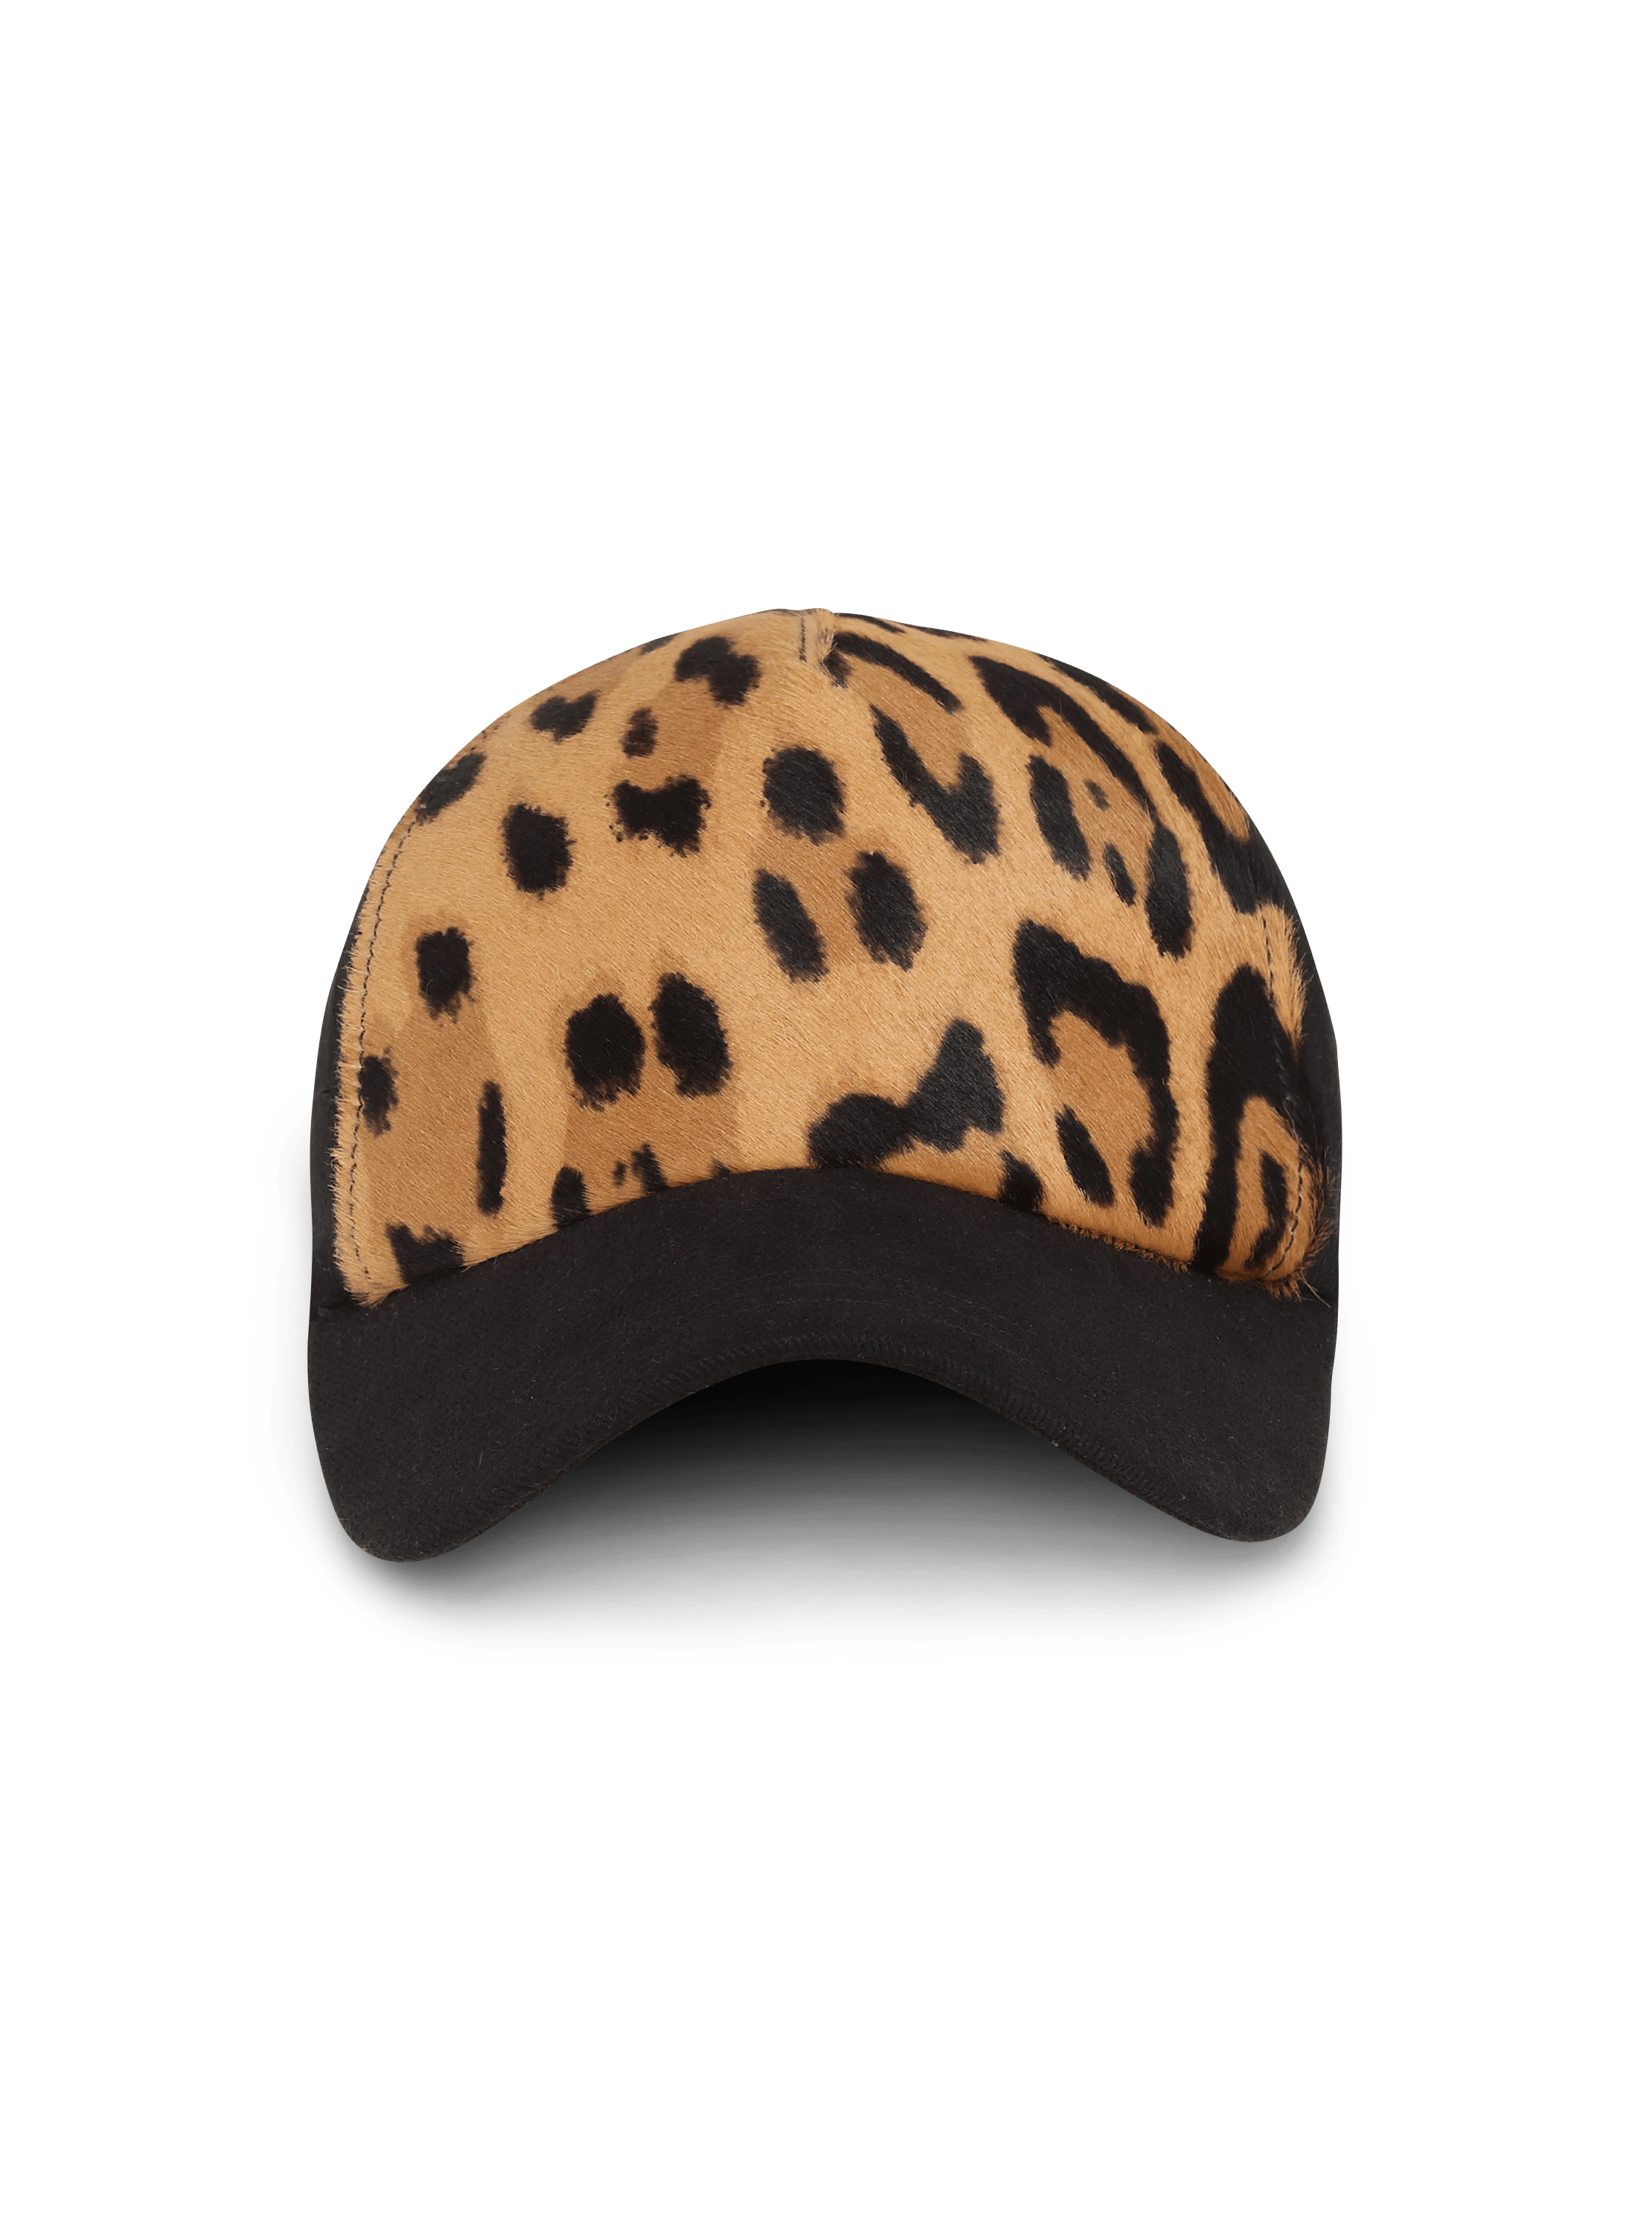 Kappe aus Leder mit Leopardenmuster